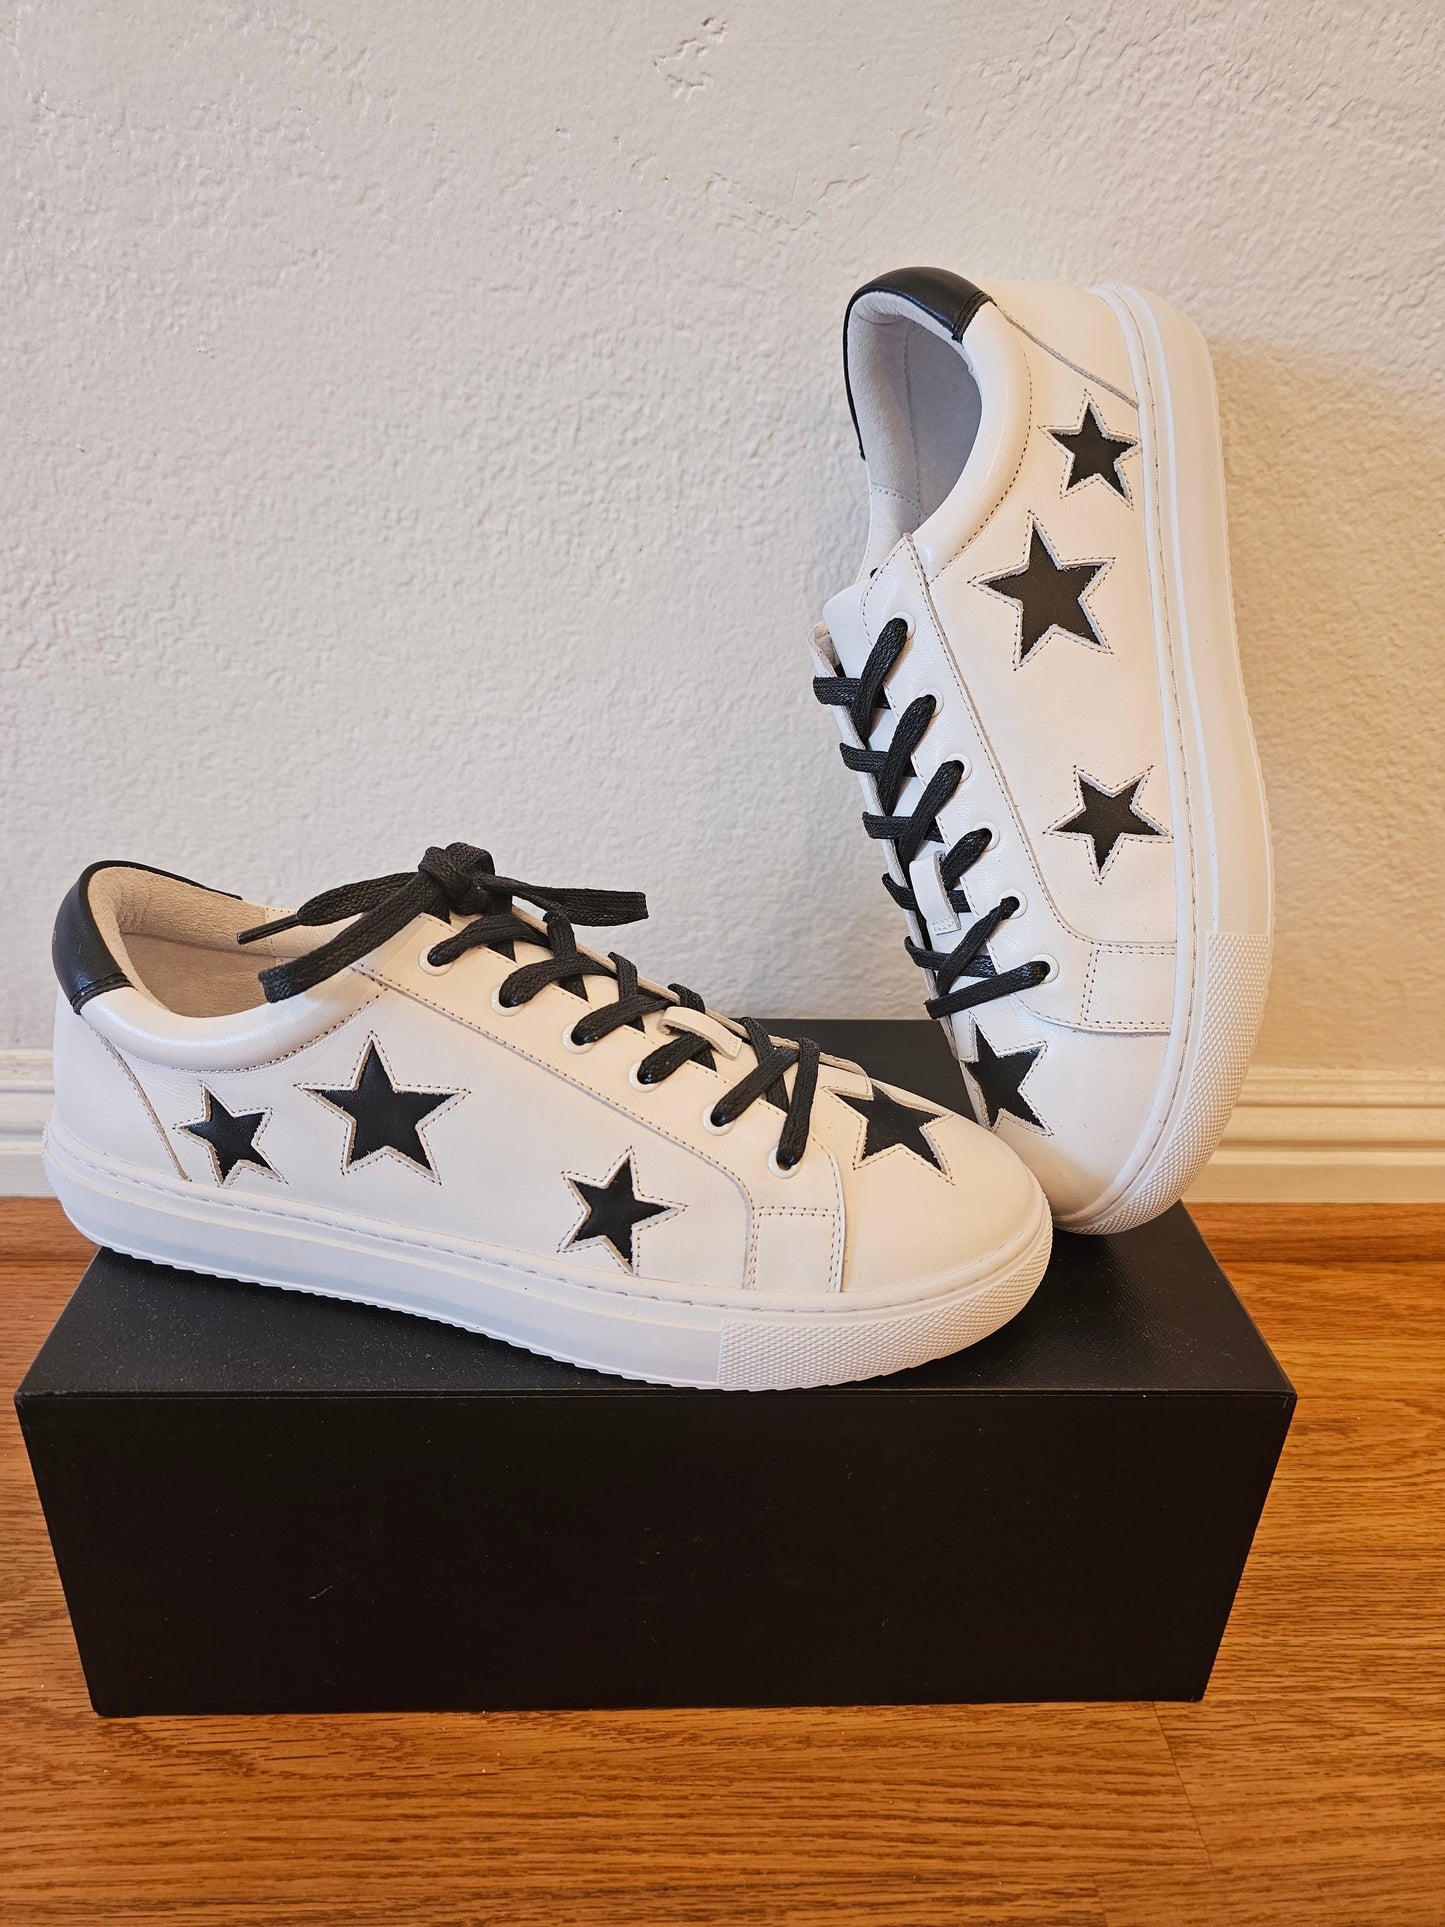 Hoxton Black Star Trainers - Size 10 (EU40)